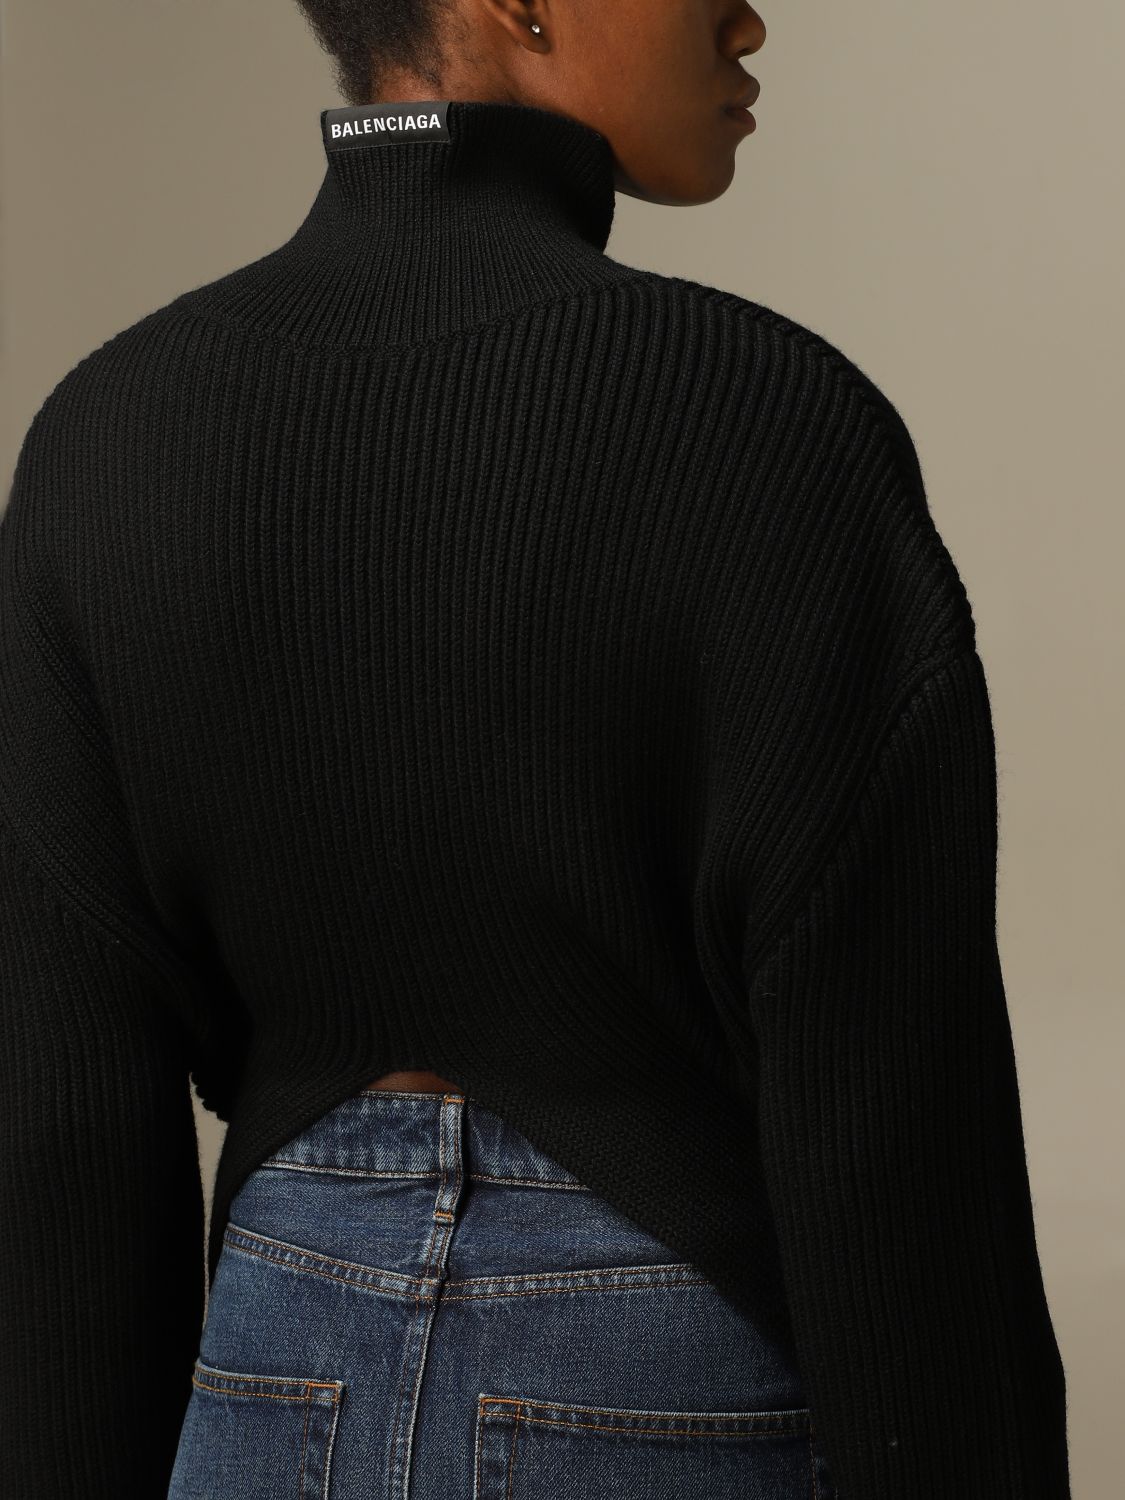 BALENCIAGA: Upside down turtleneck in ribbed wool | Sweater Balenciaga ...